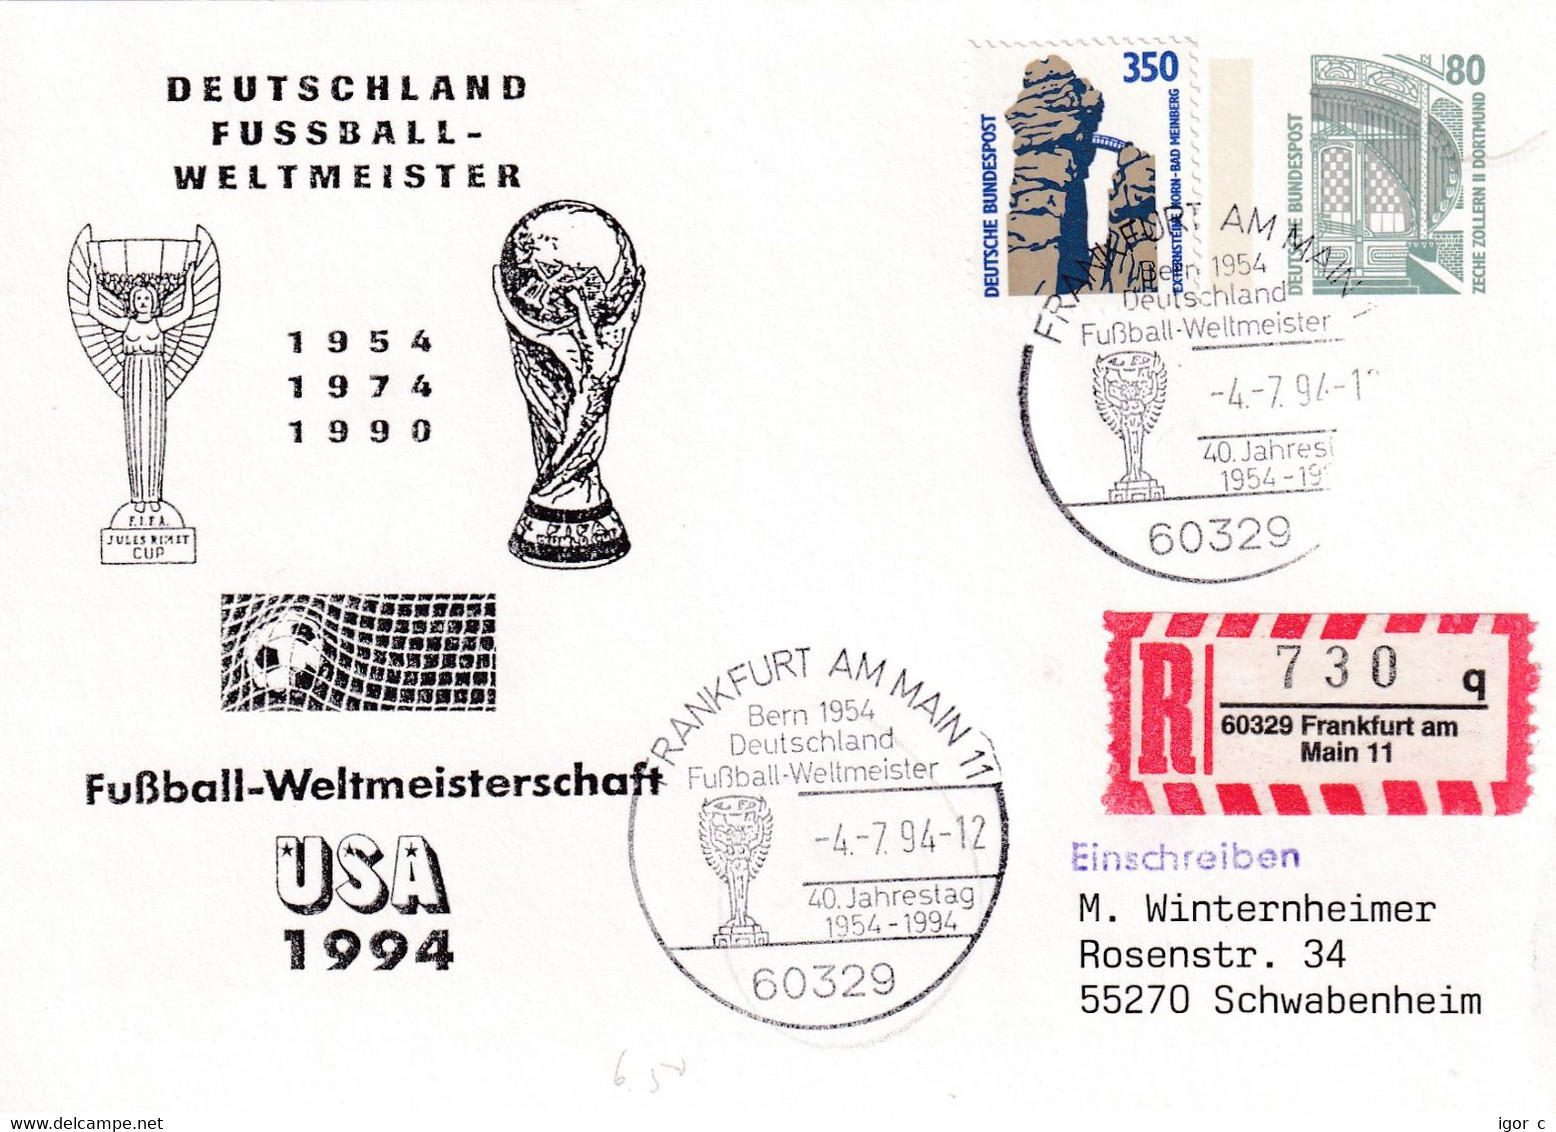 USA 1994 Registered Postal Stationery Card: Football Soccer Calcio Fussball; FIFA World Cup USA; Wunder Von Bern - 1954 – Switzerland